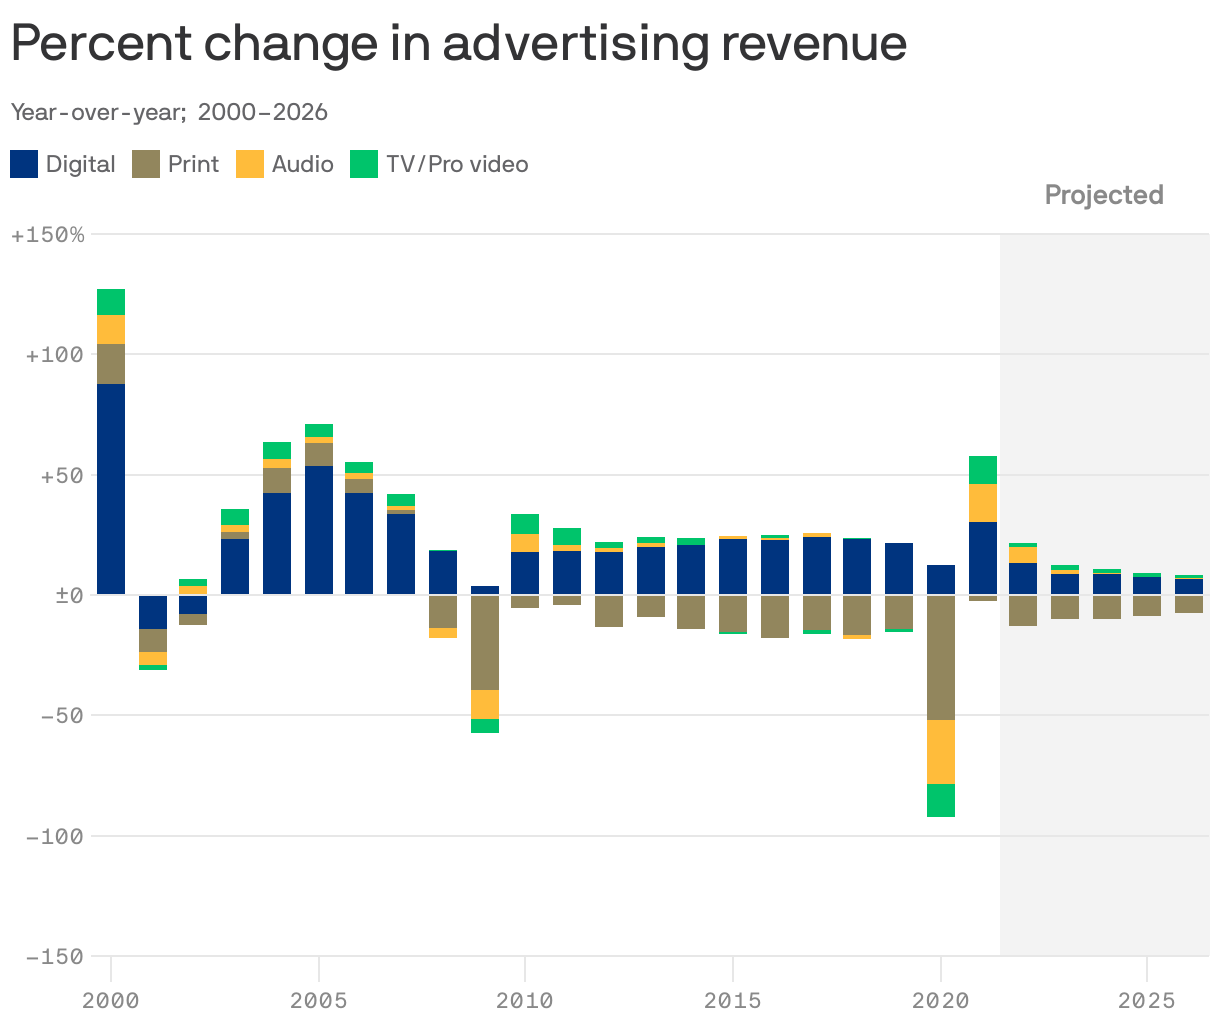 Percent change in advertising revenue